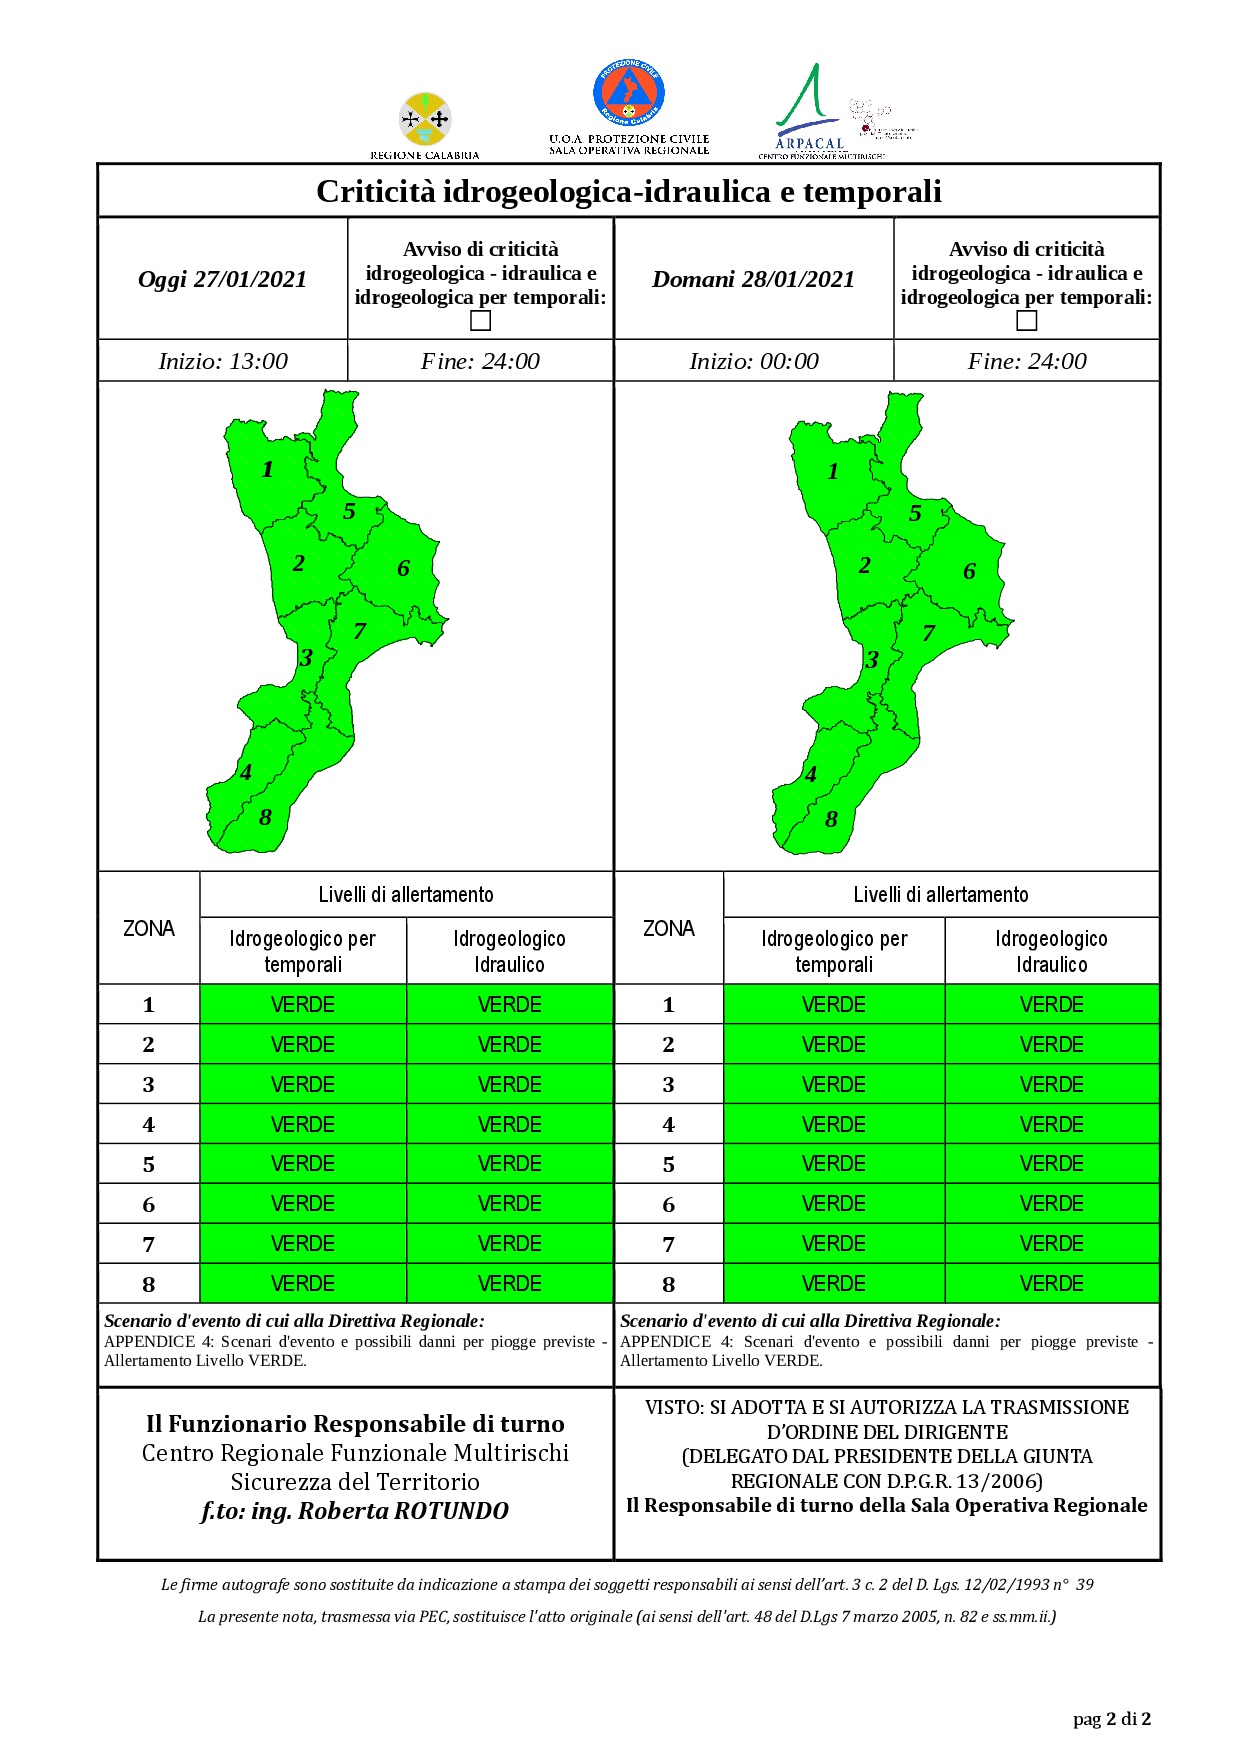 Criticità idrogeologica-idraulica e temporali in Calabria 27-01-2021